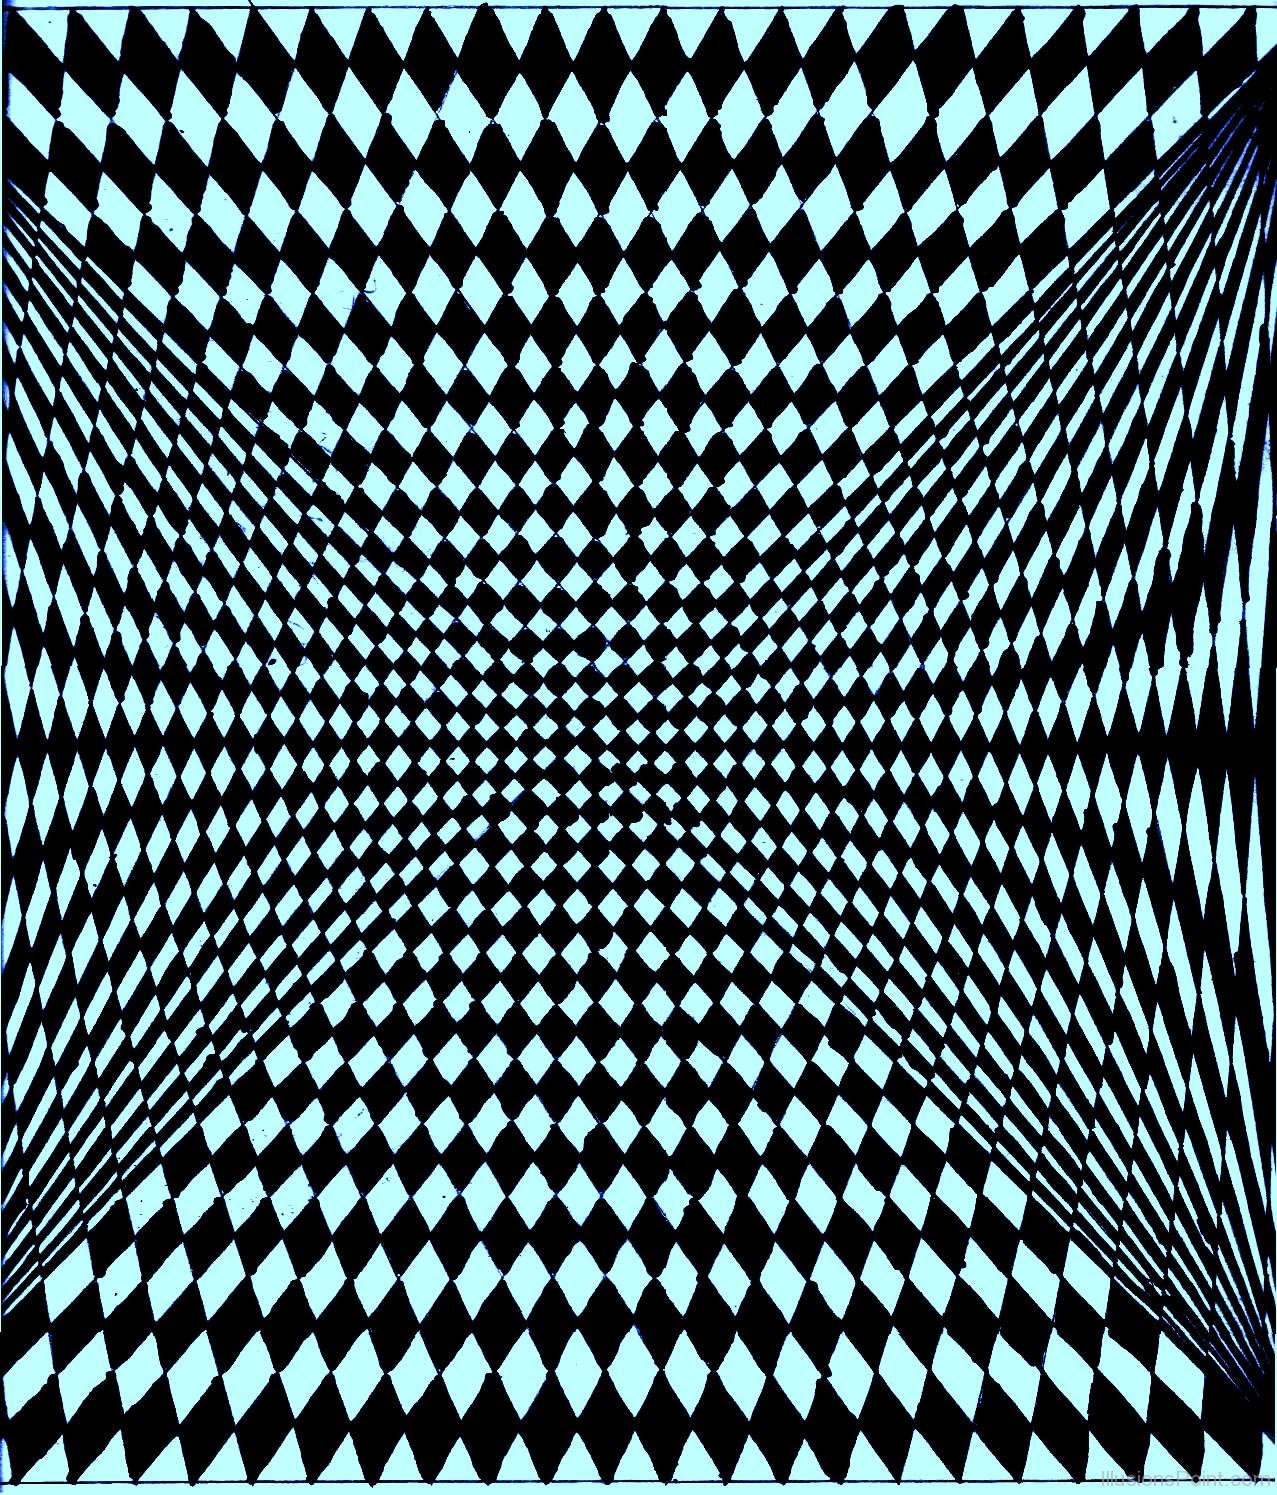 Иллюзия. Оптикал Иллюжн. Оптические иллюзии. Визуальные иллюзии. Иллюзия зрения.